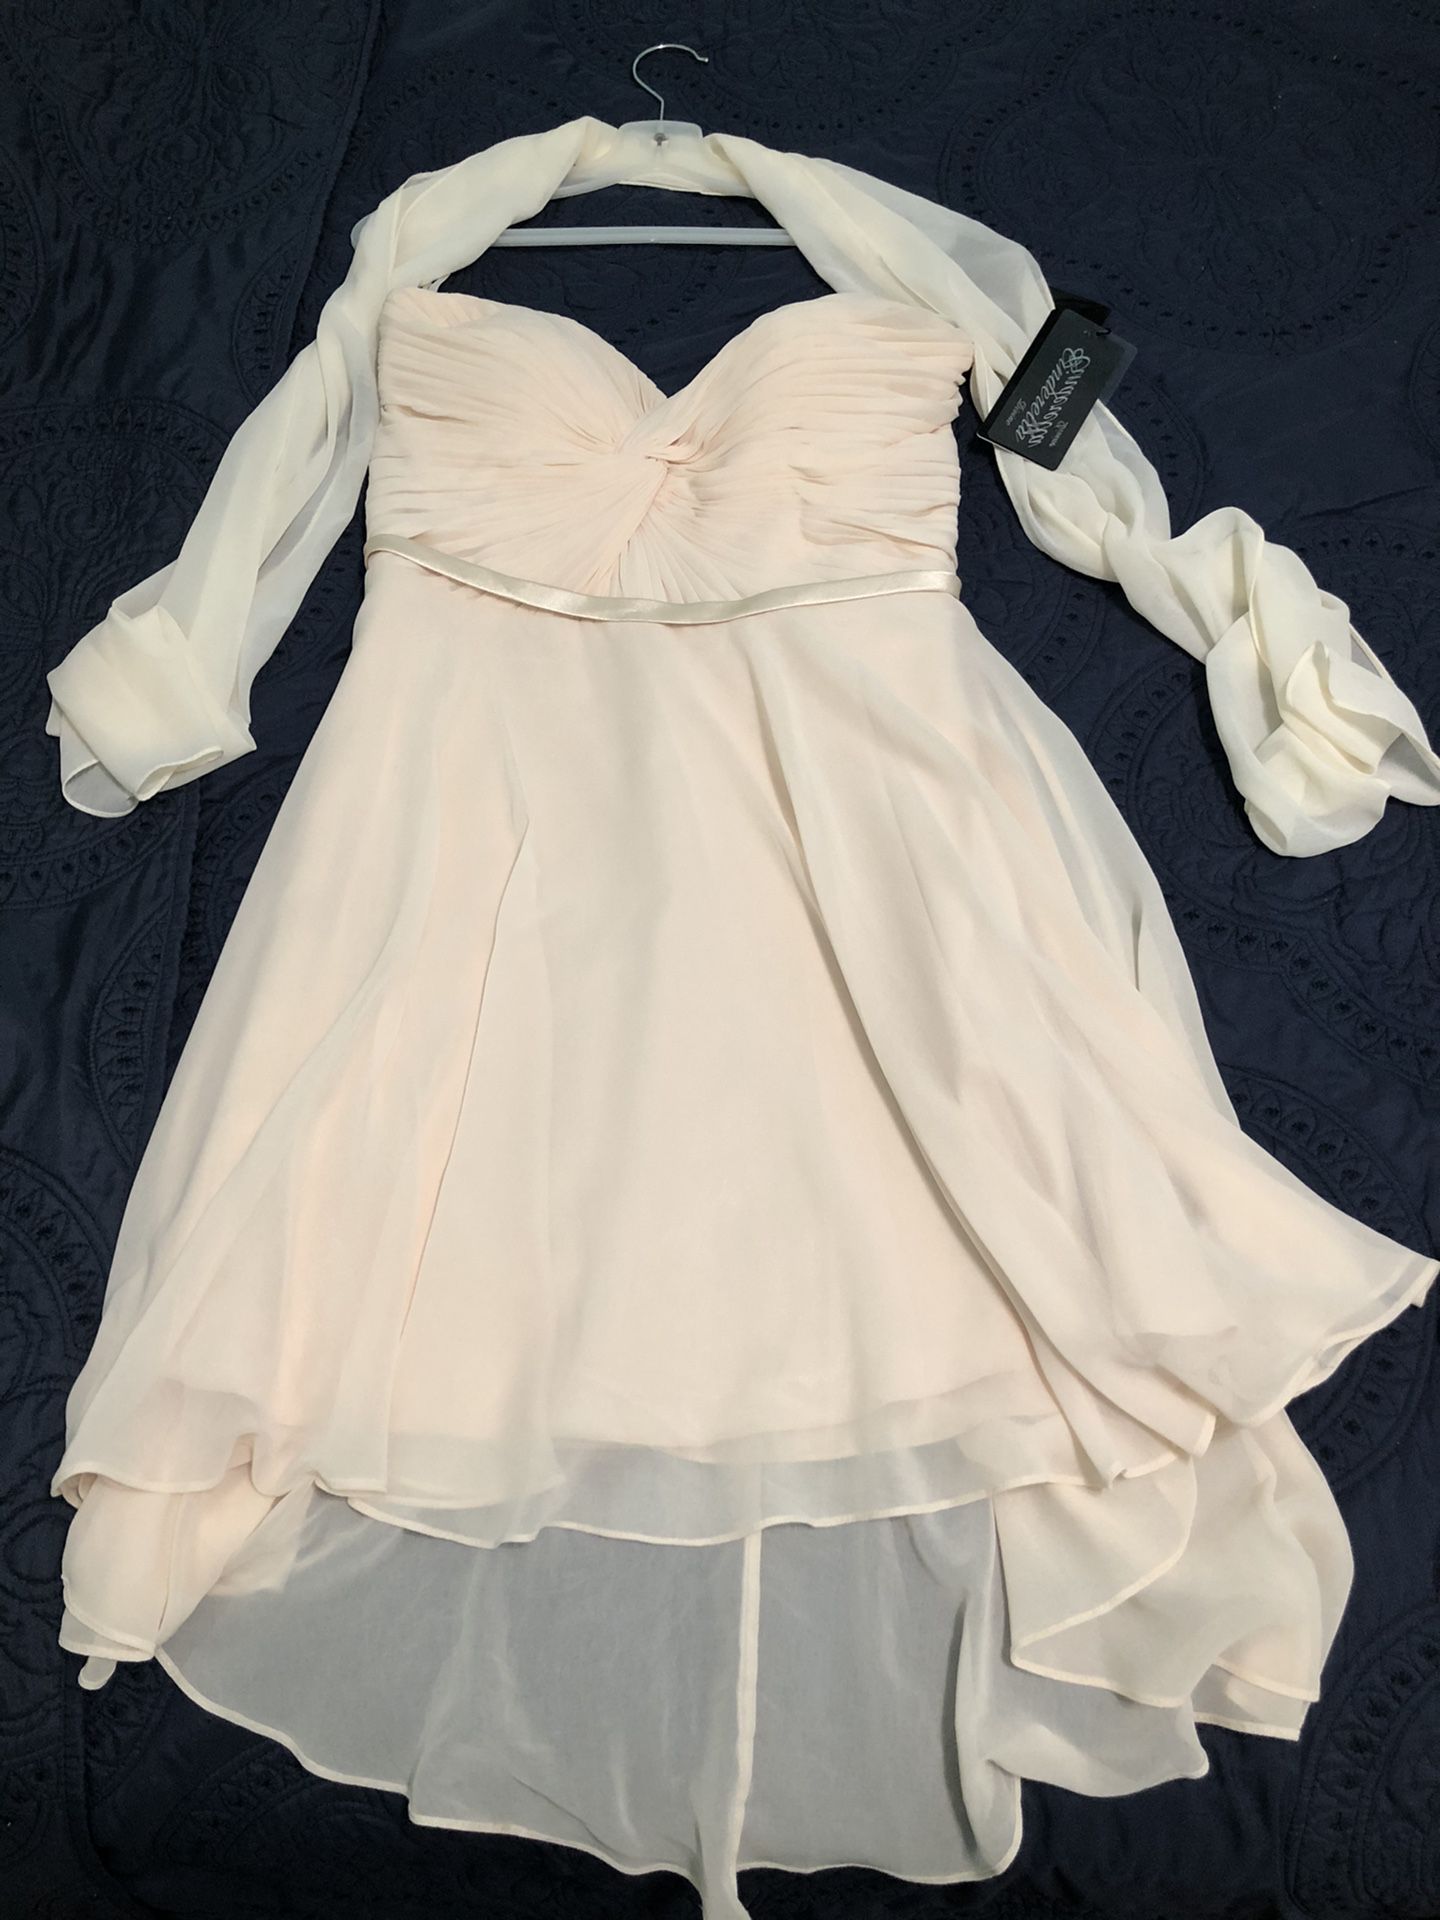 Cream strapless dress size 14 NWT